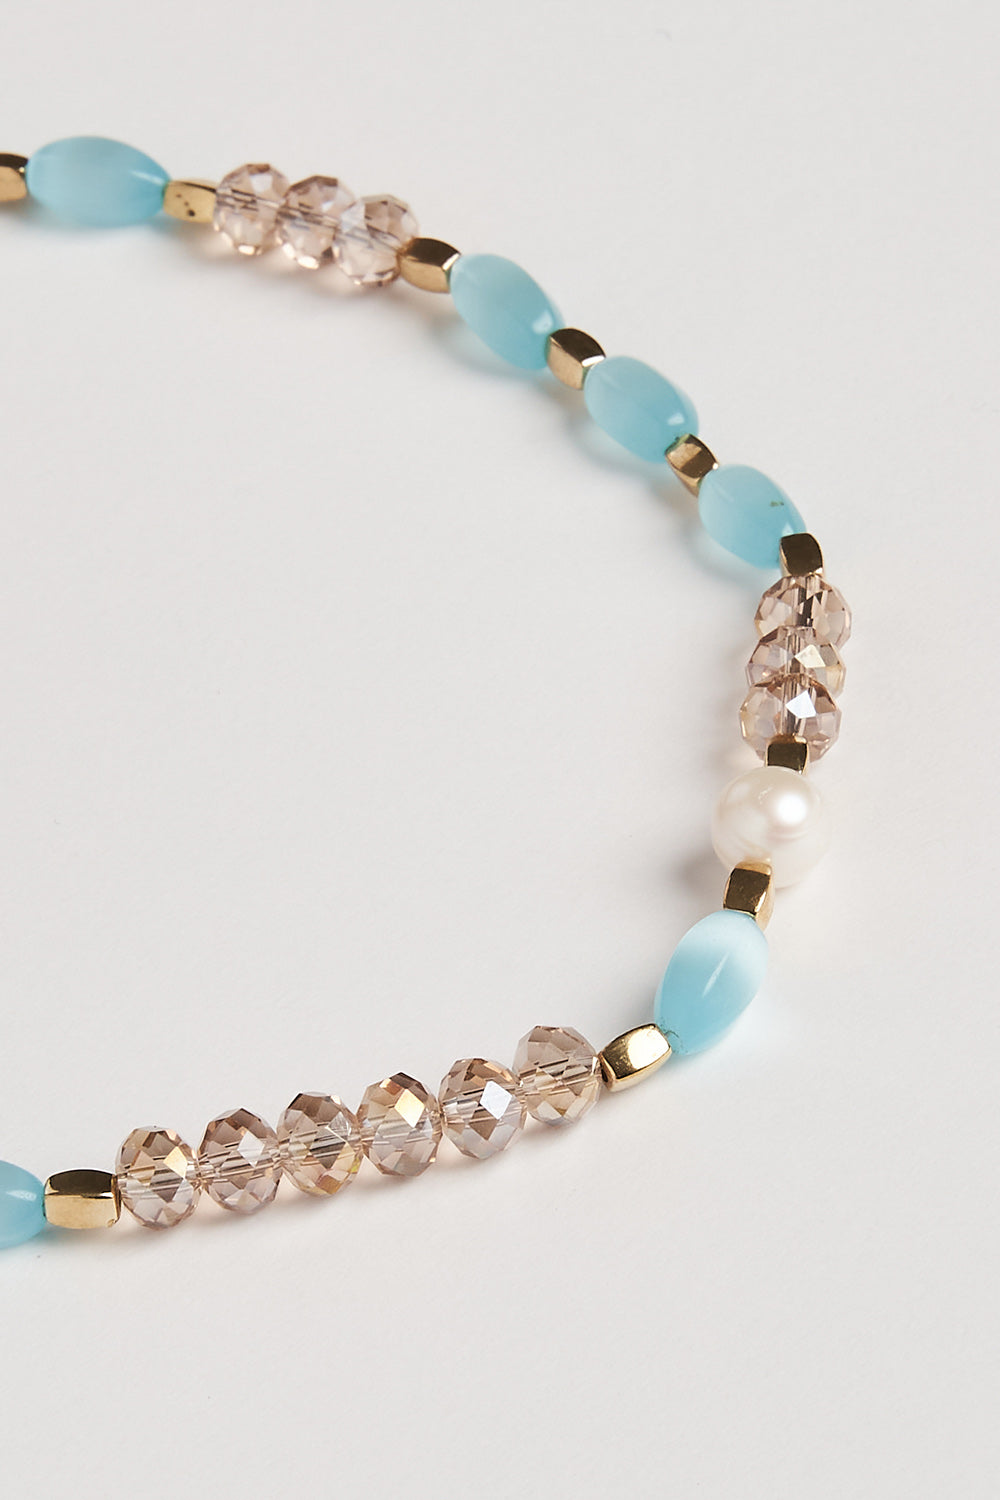 Peridot, Amethyst and Cranberry Glass Beads Necklace - Estella Loretto